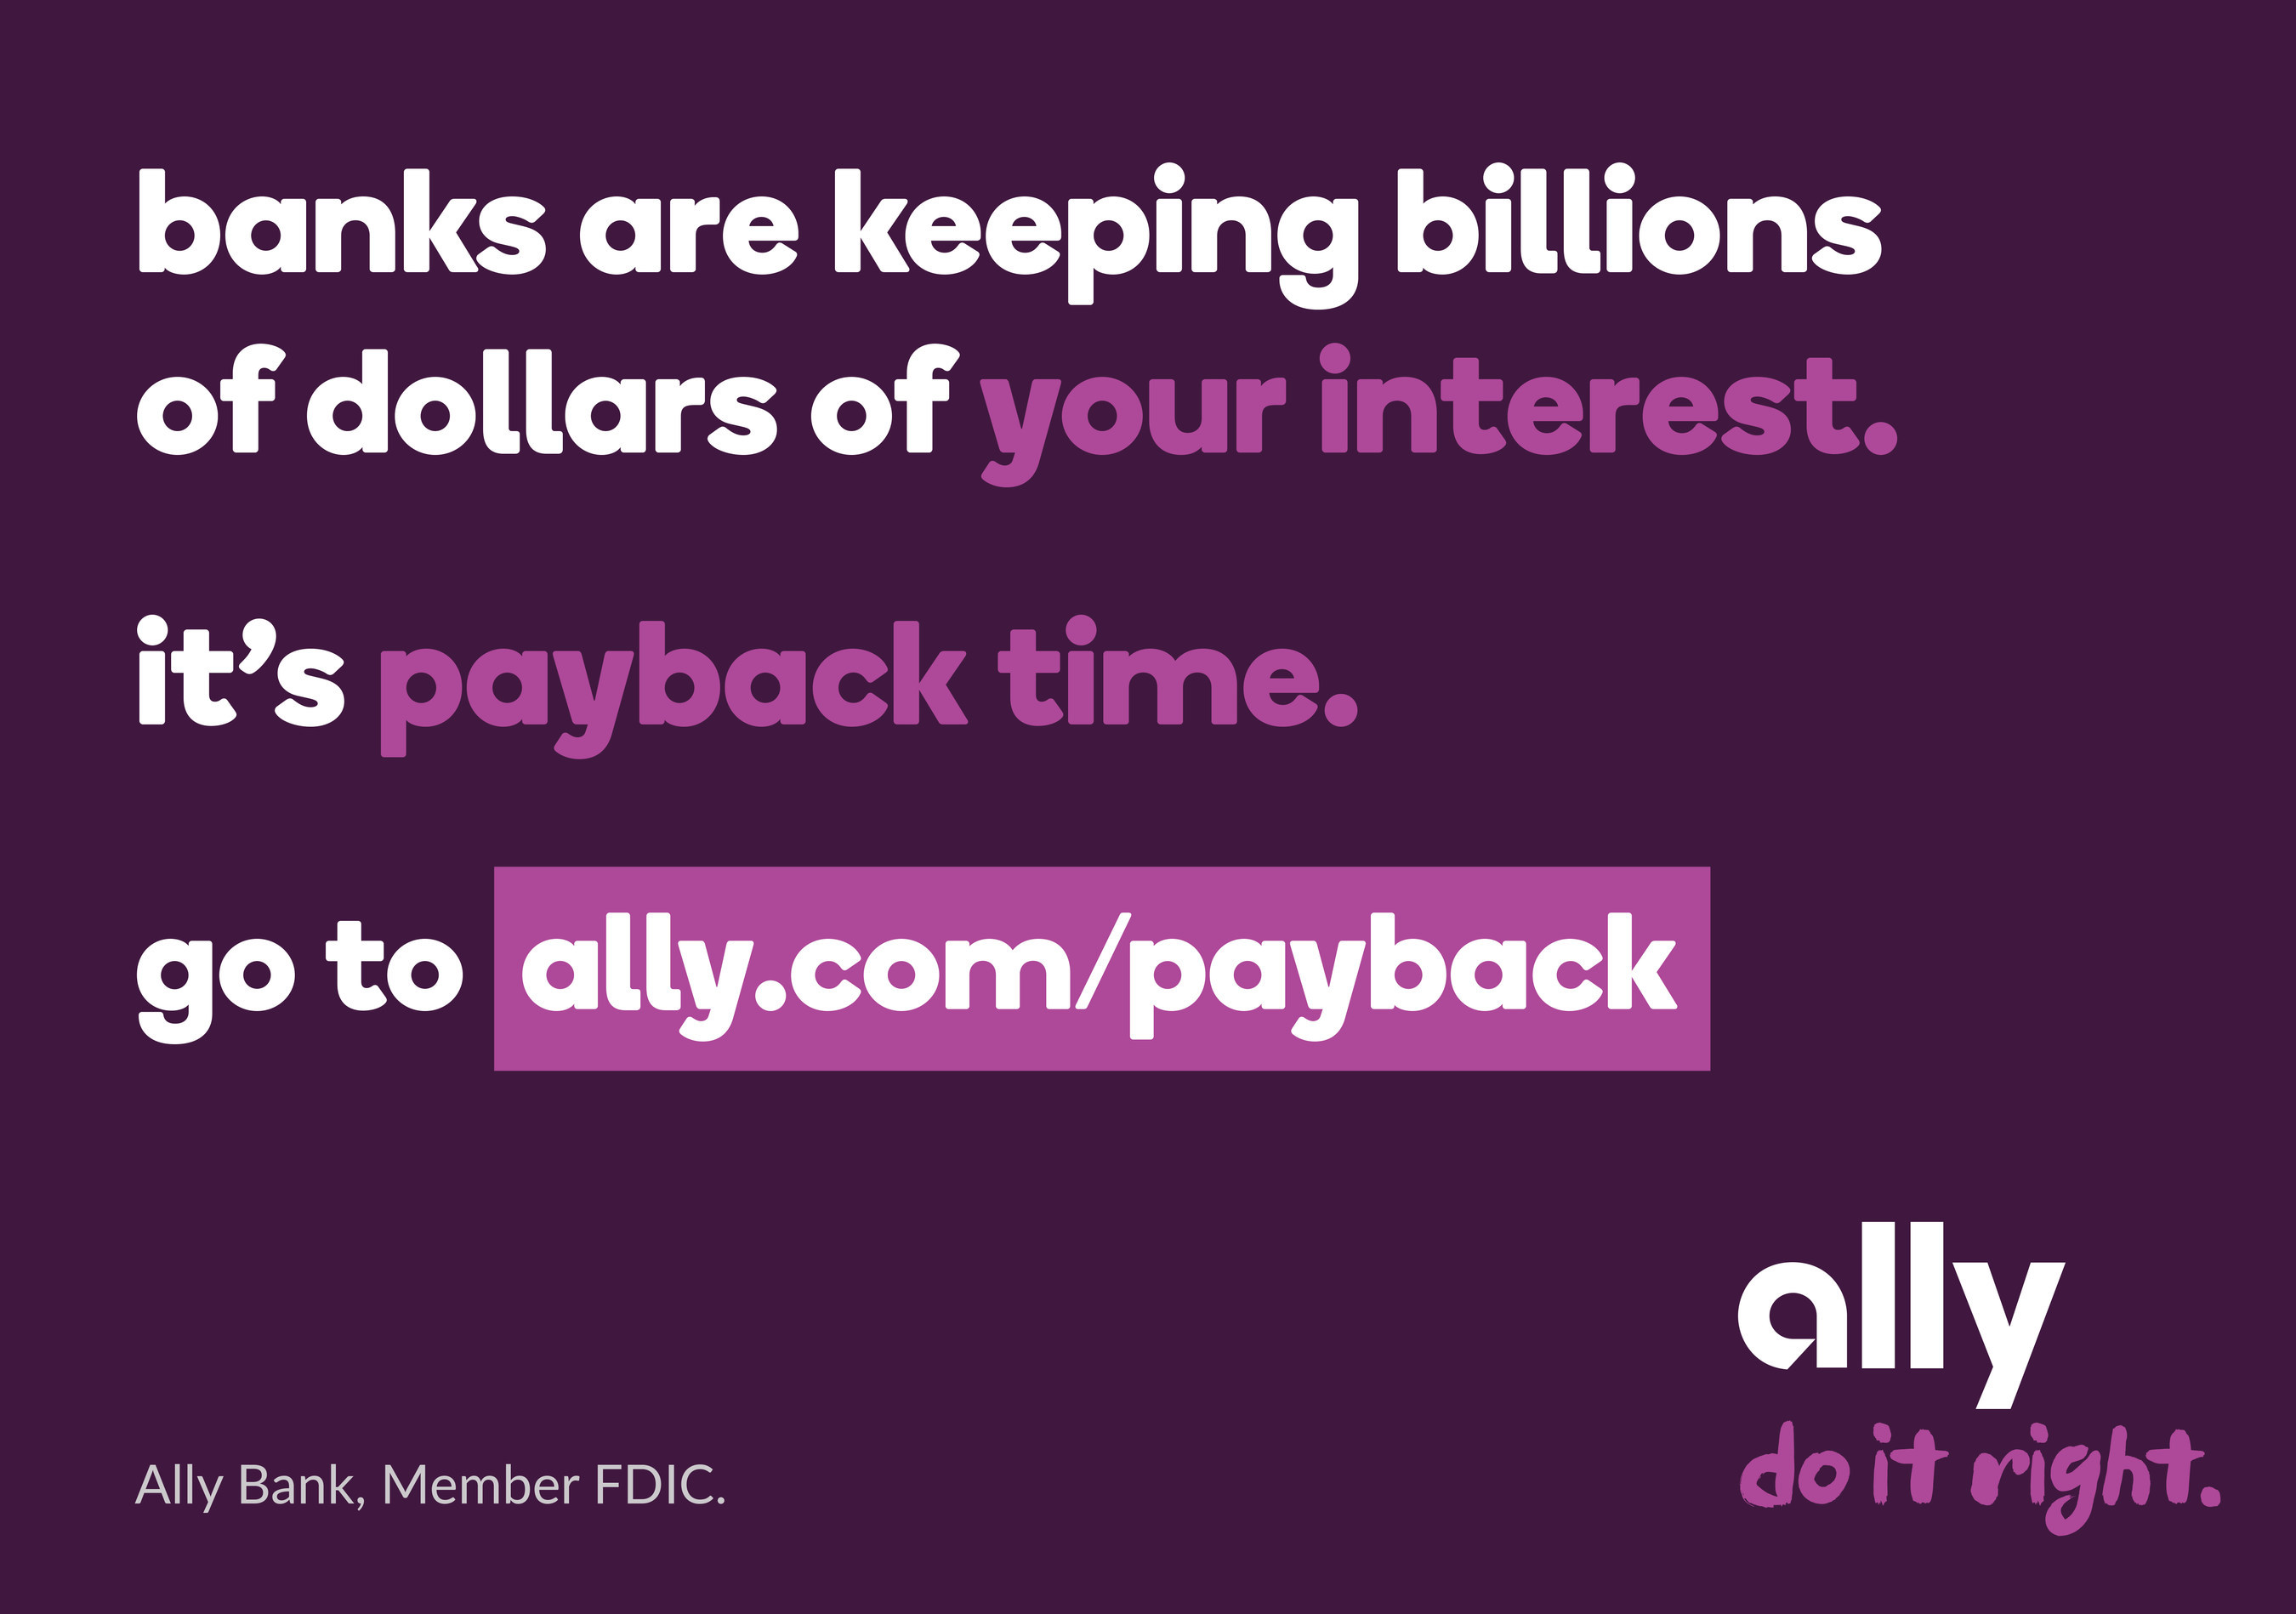 Ally Bank Announces 1-Percent Cash Bonus for New Deposits - Oct 15, 2018